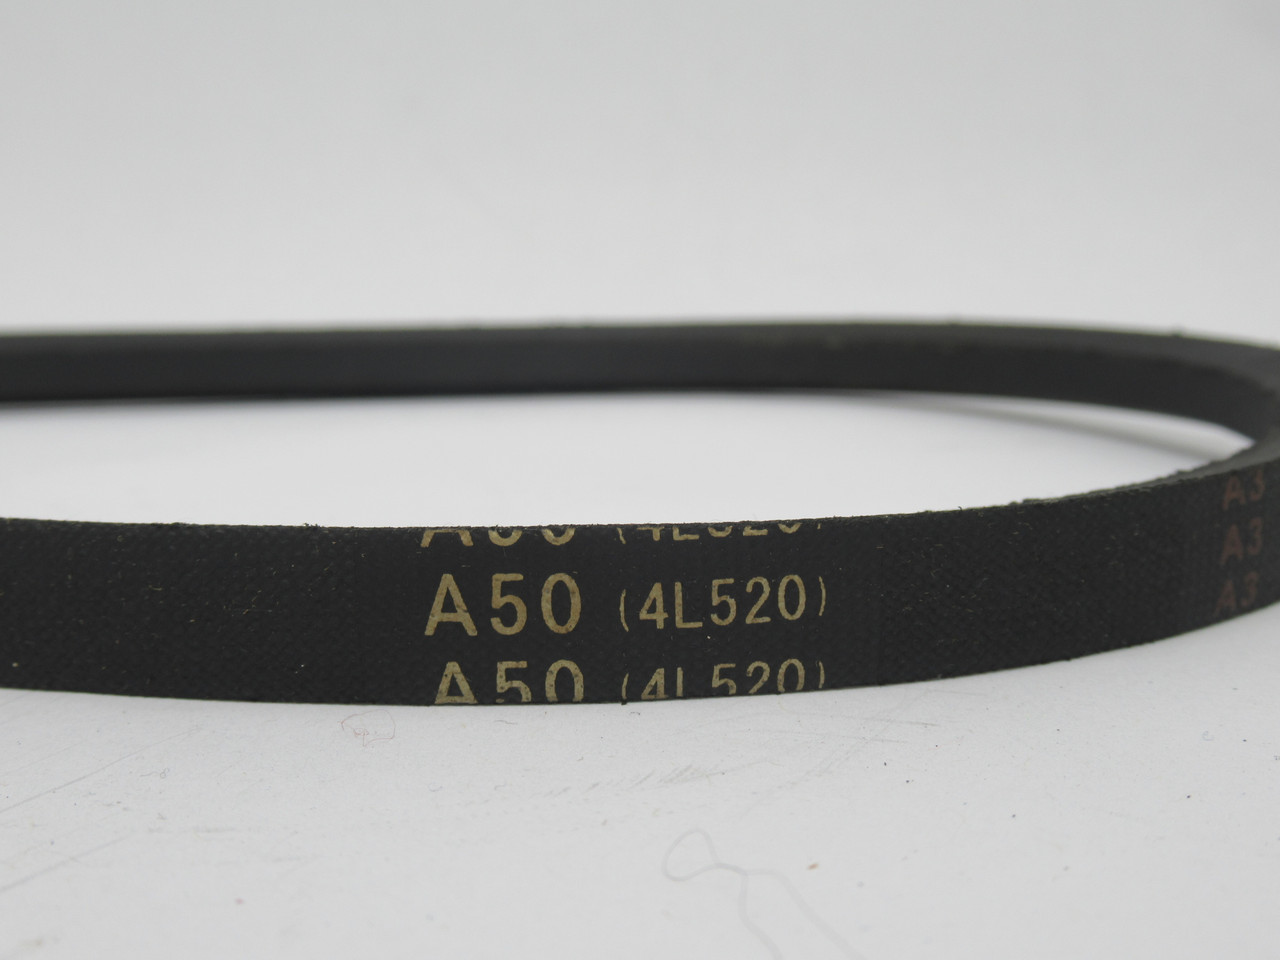 Jason A50 (4L520) Classic Wrapped V-Belt 52"L 1/2"W 5/16" Thick NEW